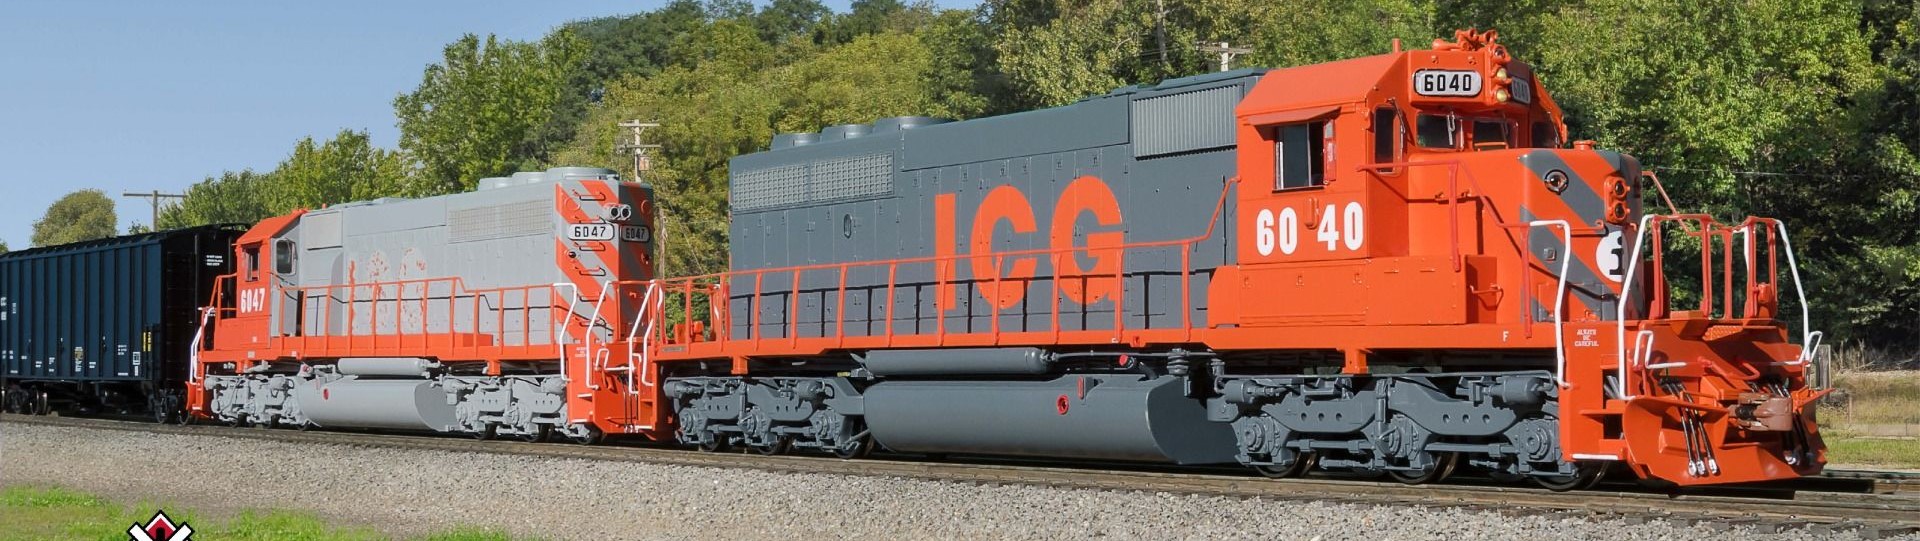 ScaleTrains Rivet Counter HO SXT38812 DCC Ready EMD SD40-2 Locomotive ICG 'Orange & Gray' ICG #6046